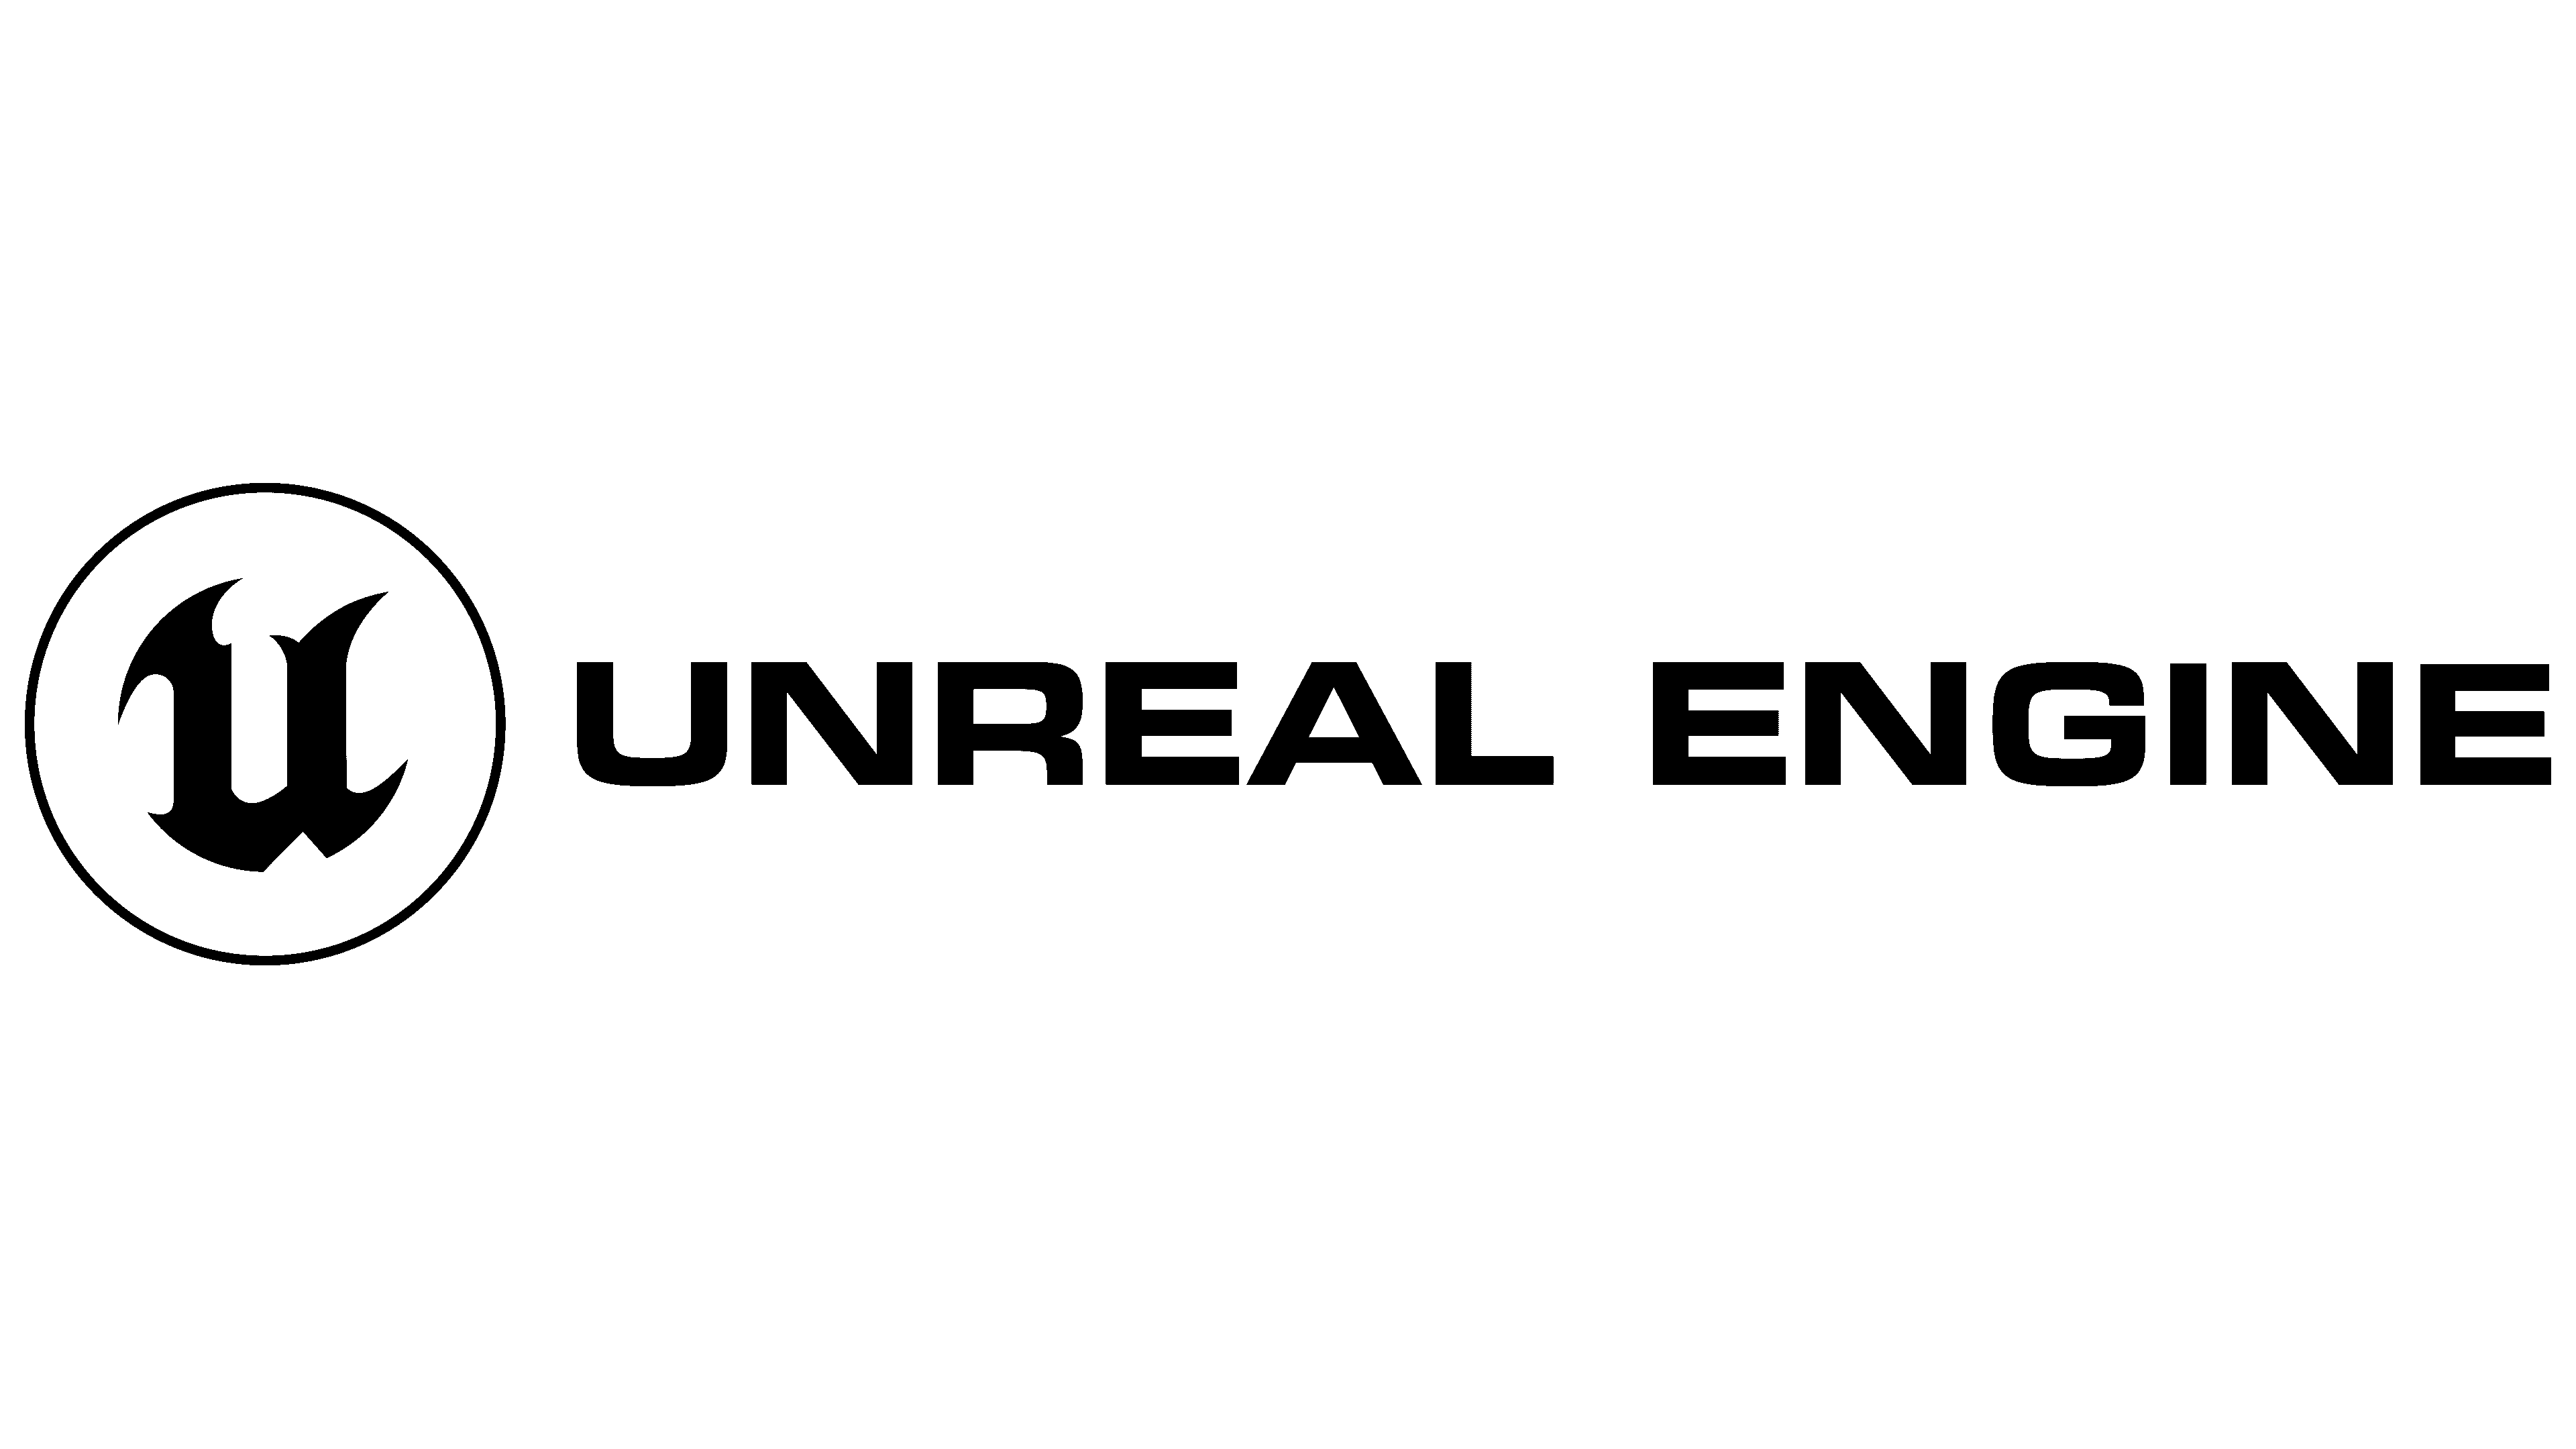 unreal engine logo white